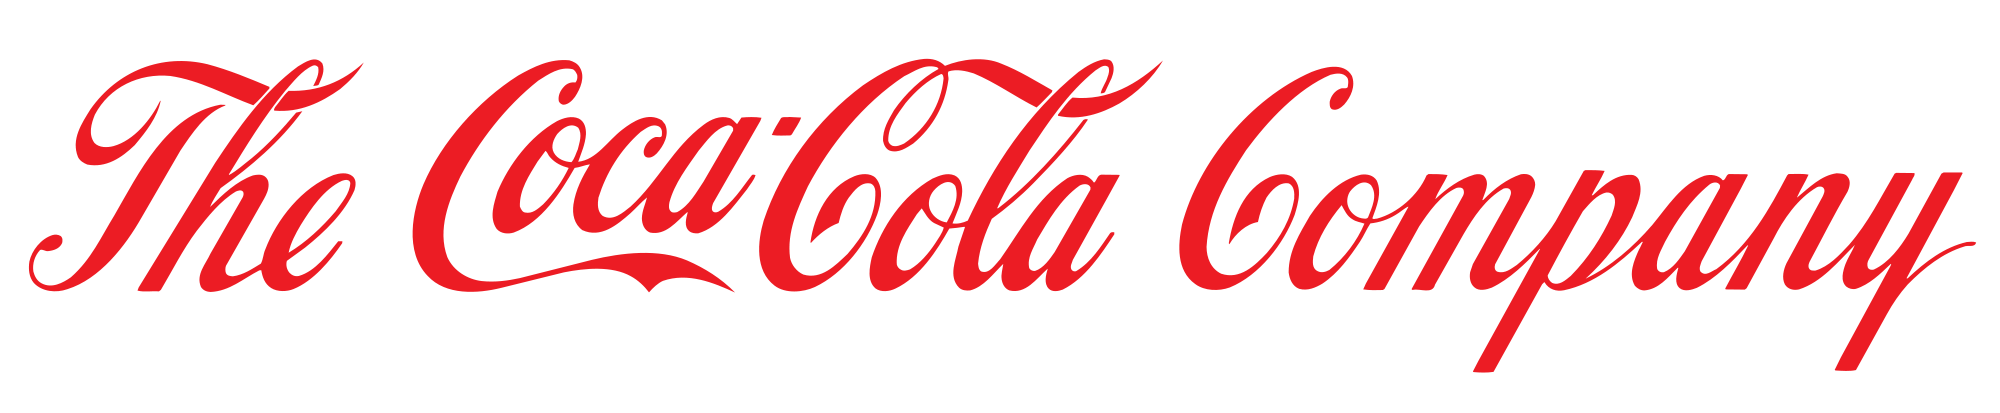 Coca Cola Logo Background PNG Image